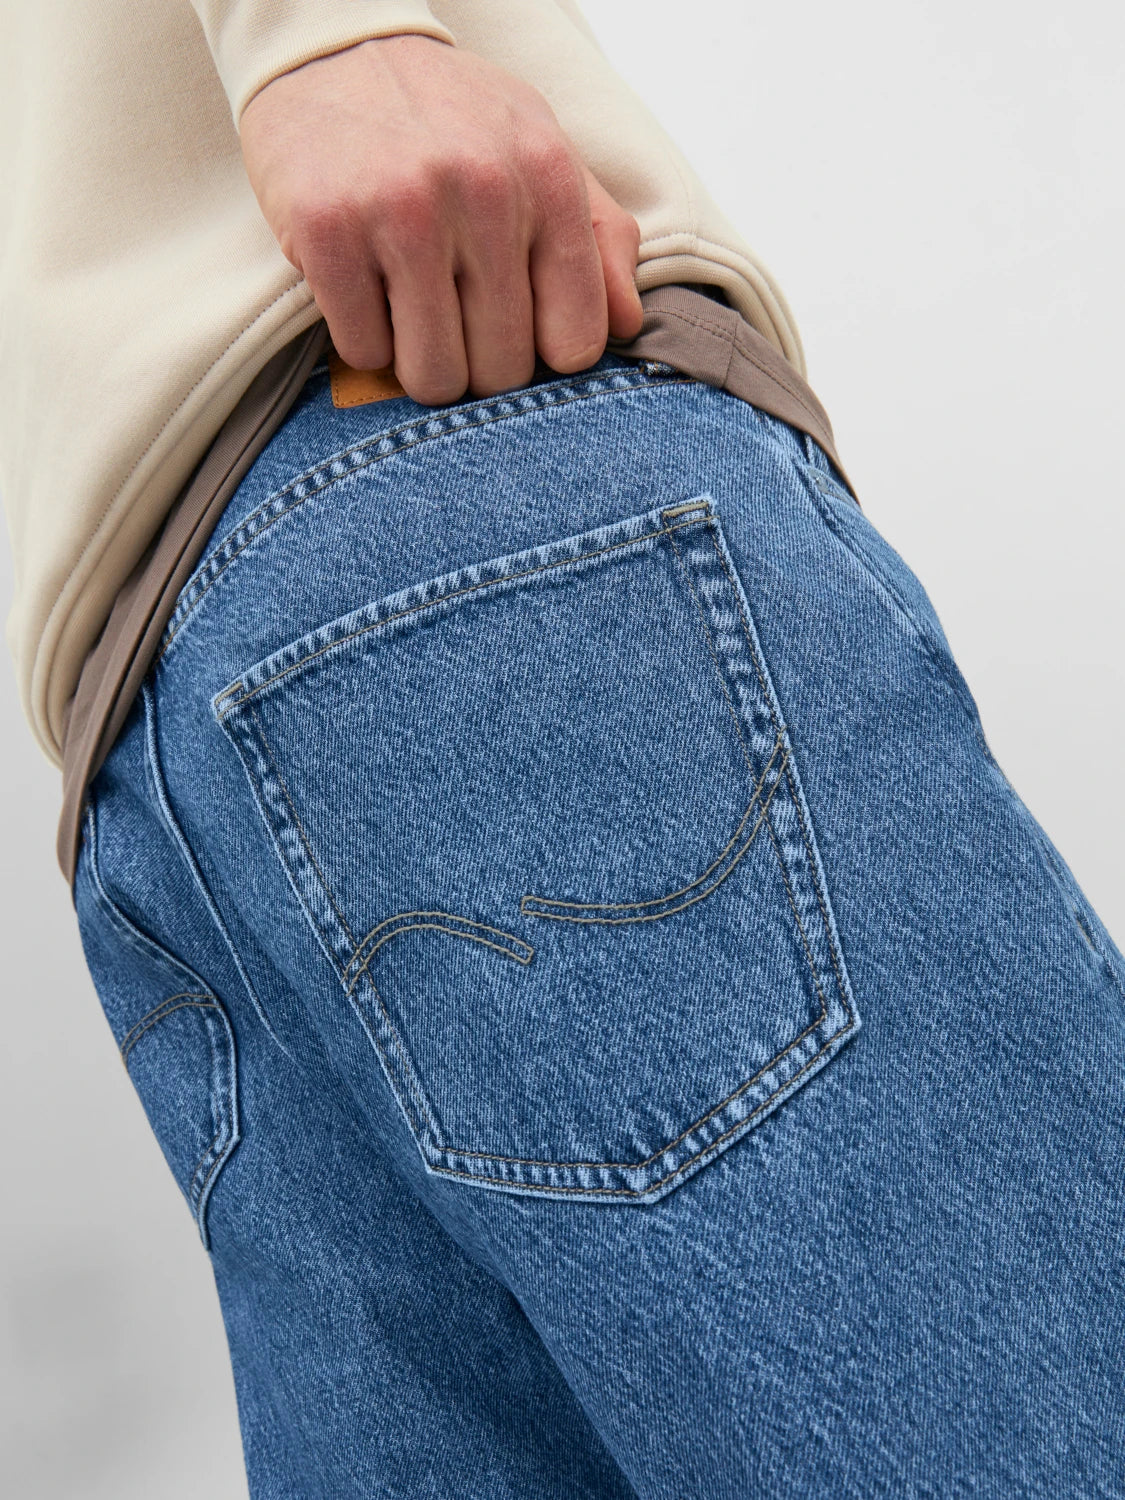 Jack & Jones | ALEX ORIGINAL - Baggy Fit Jeans  | SBD 301 usedwashed